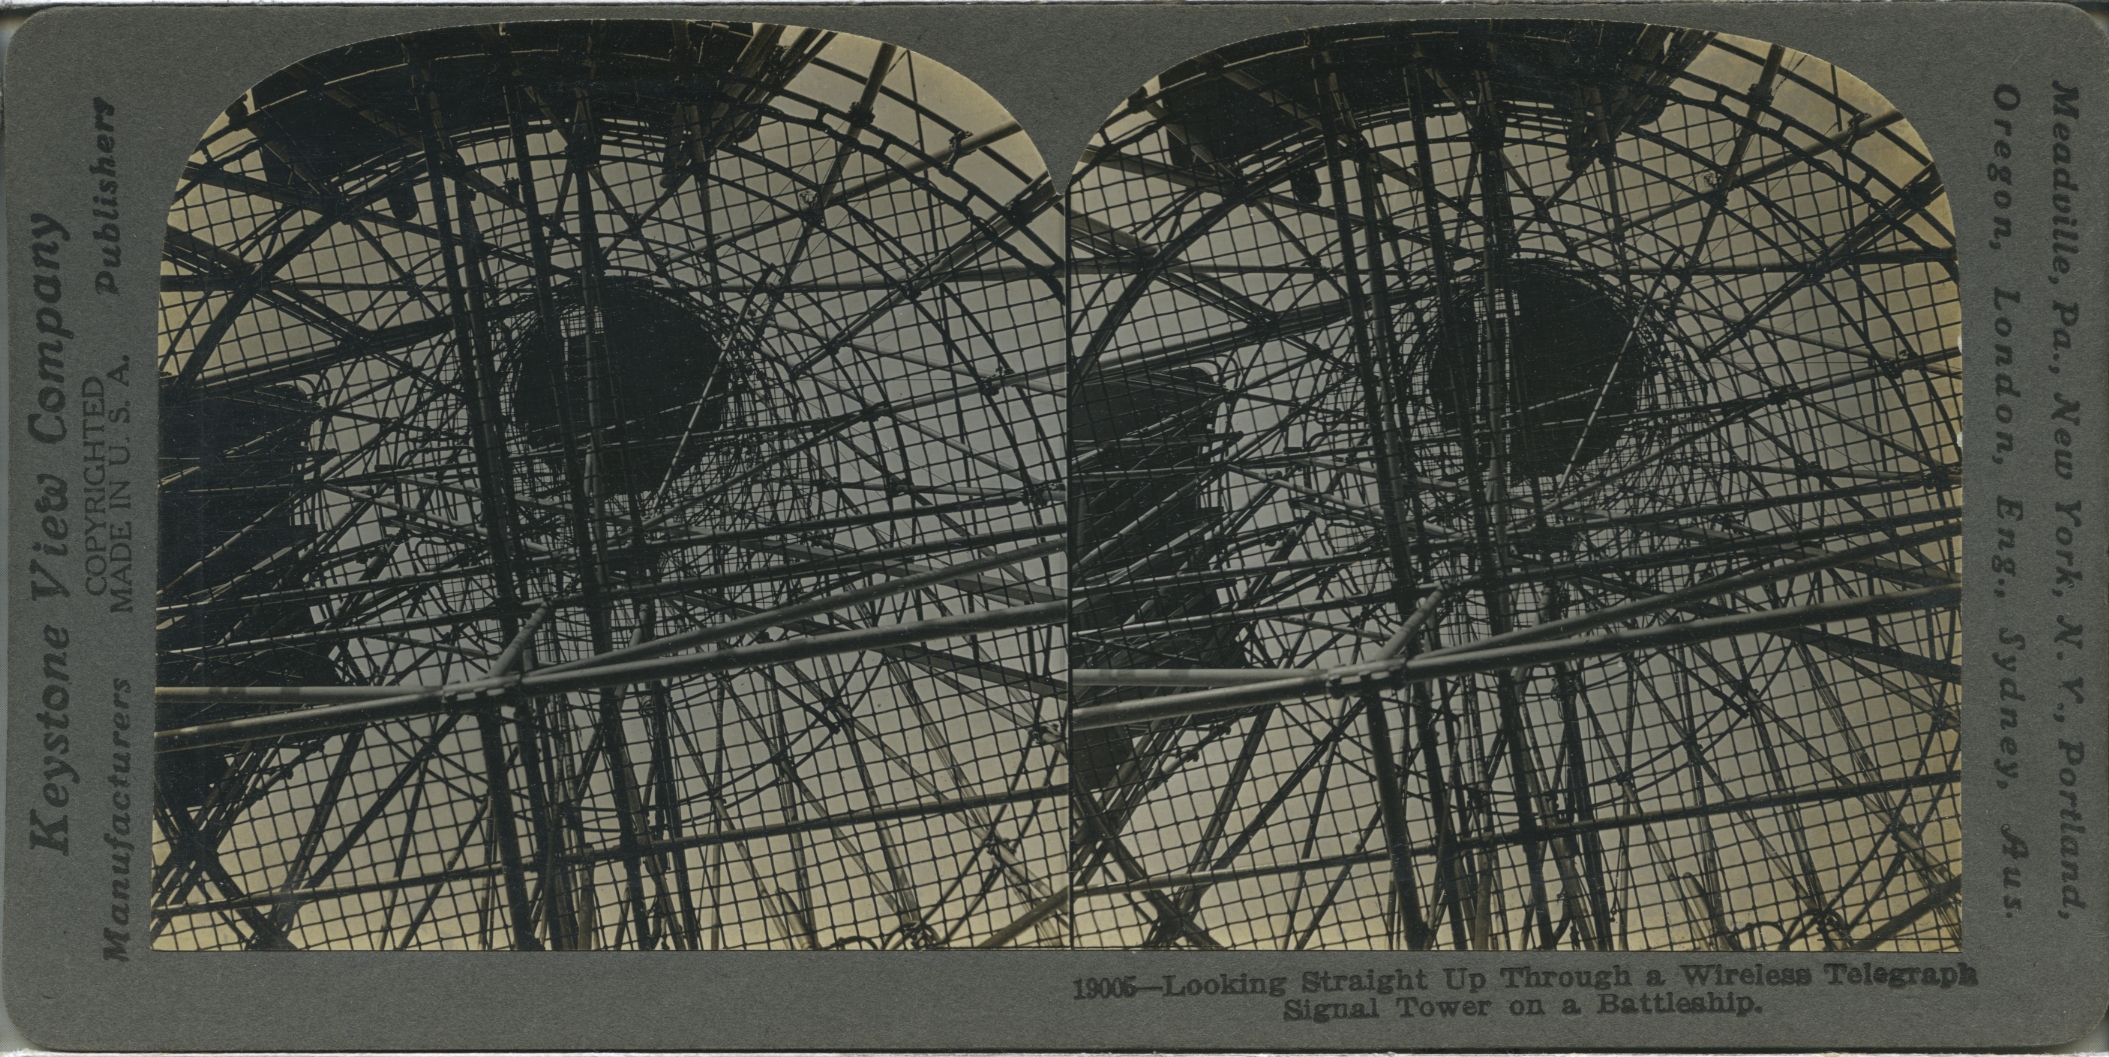 Looking Straight Up Through a Wireless Telegraph Signal Tower on a Battleship